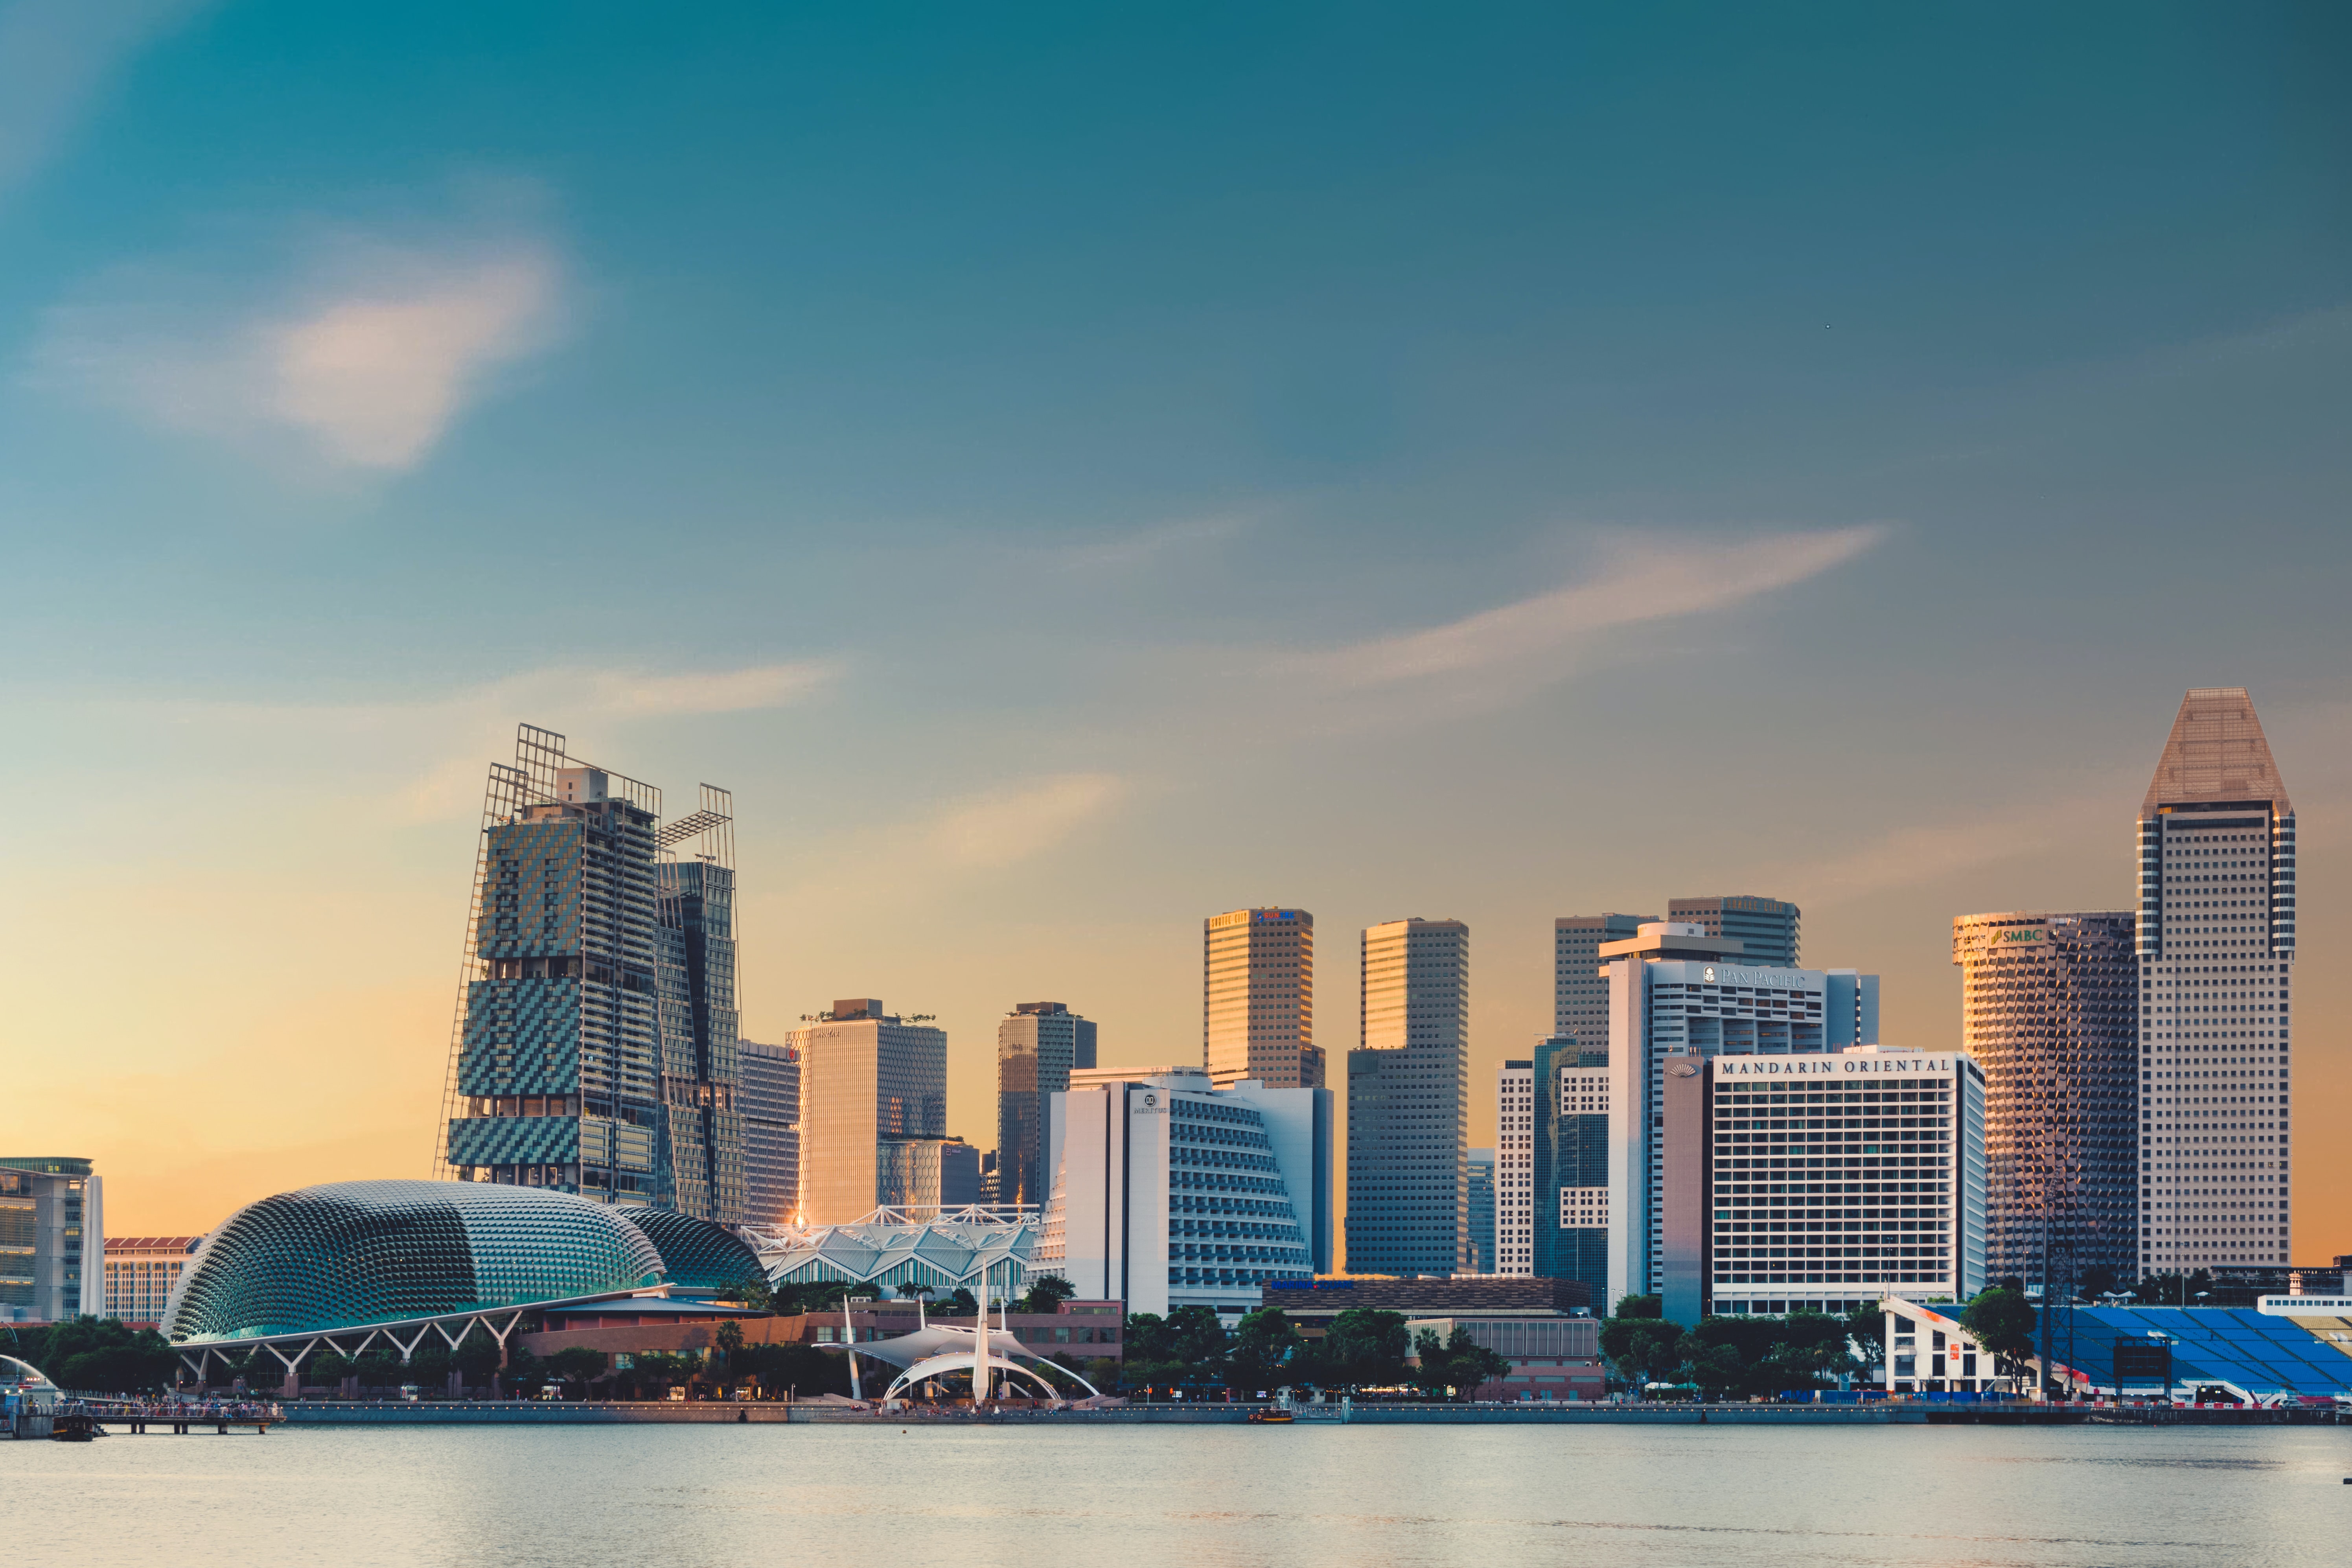 Photo of Singapore city taken across from the Marina Bay